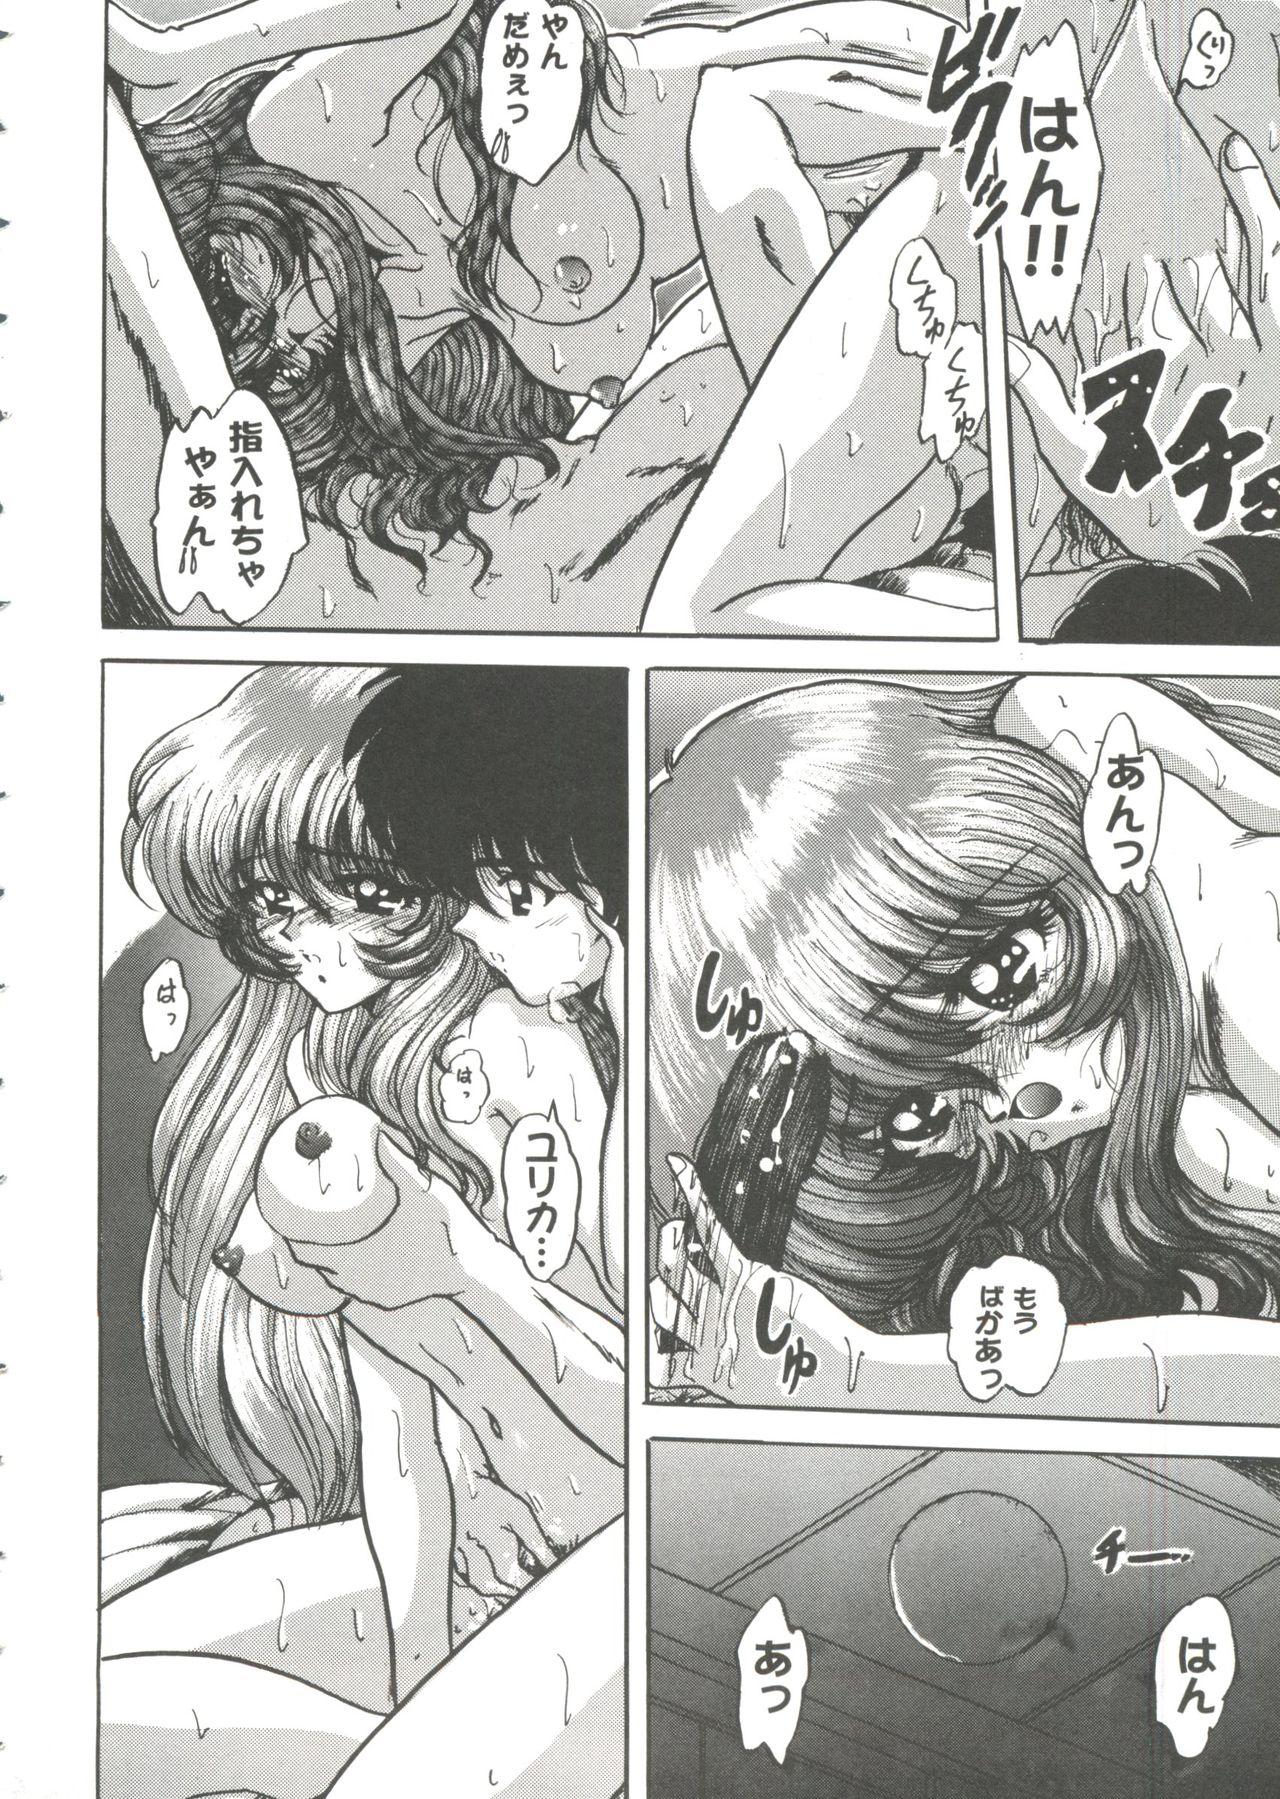 Plug Girl's Parade 99 Cut 7 - Sakura taisen Martian successor nadesico Rurouni kenshin White album Fisting - Page 8